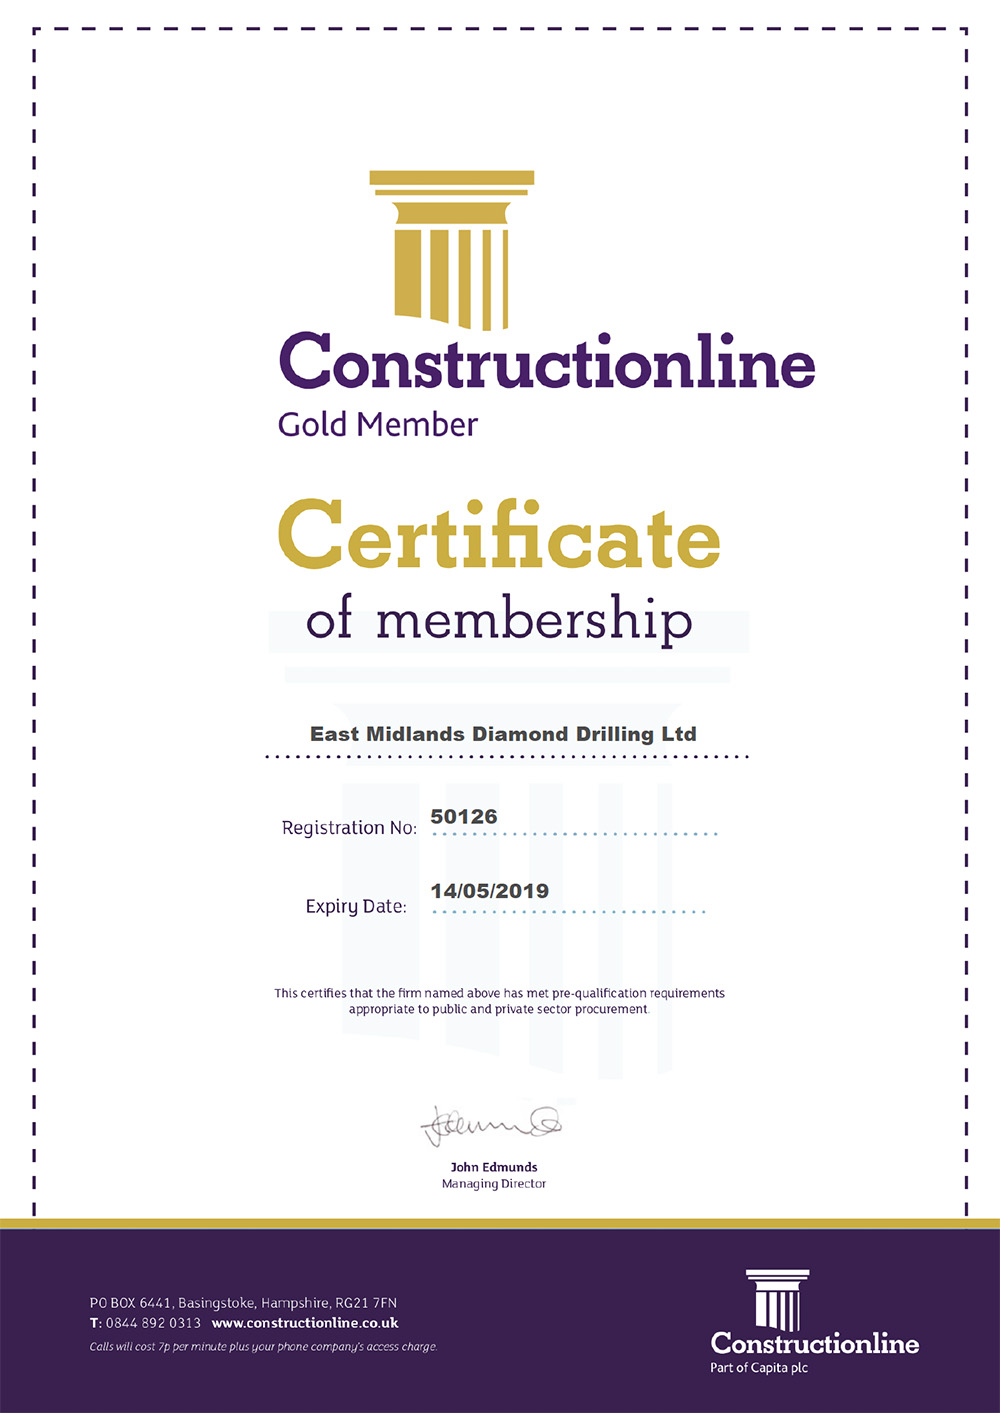 Constructionline Certificate EMDD UNIVERSAL